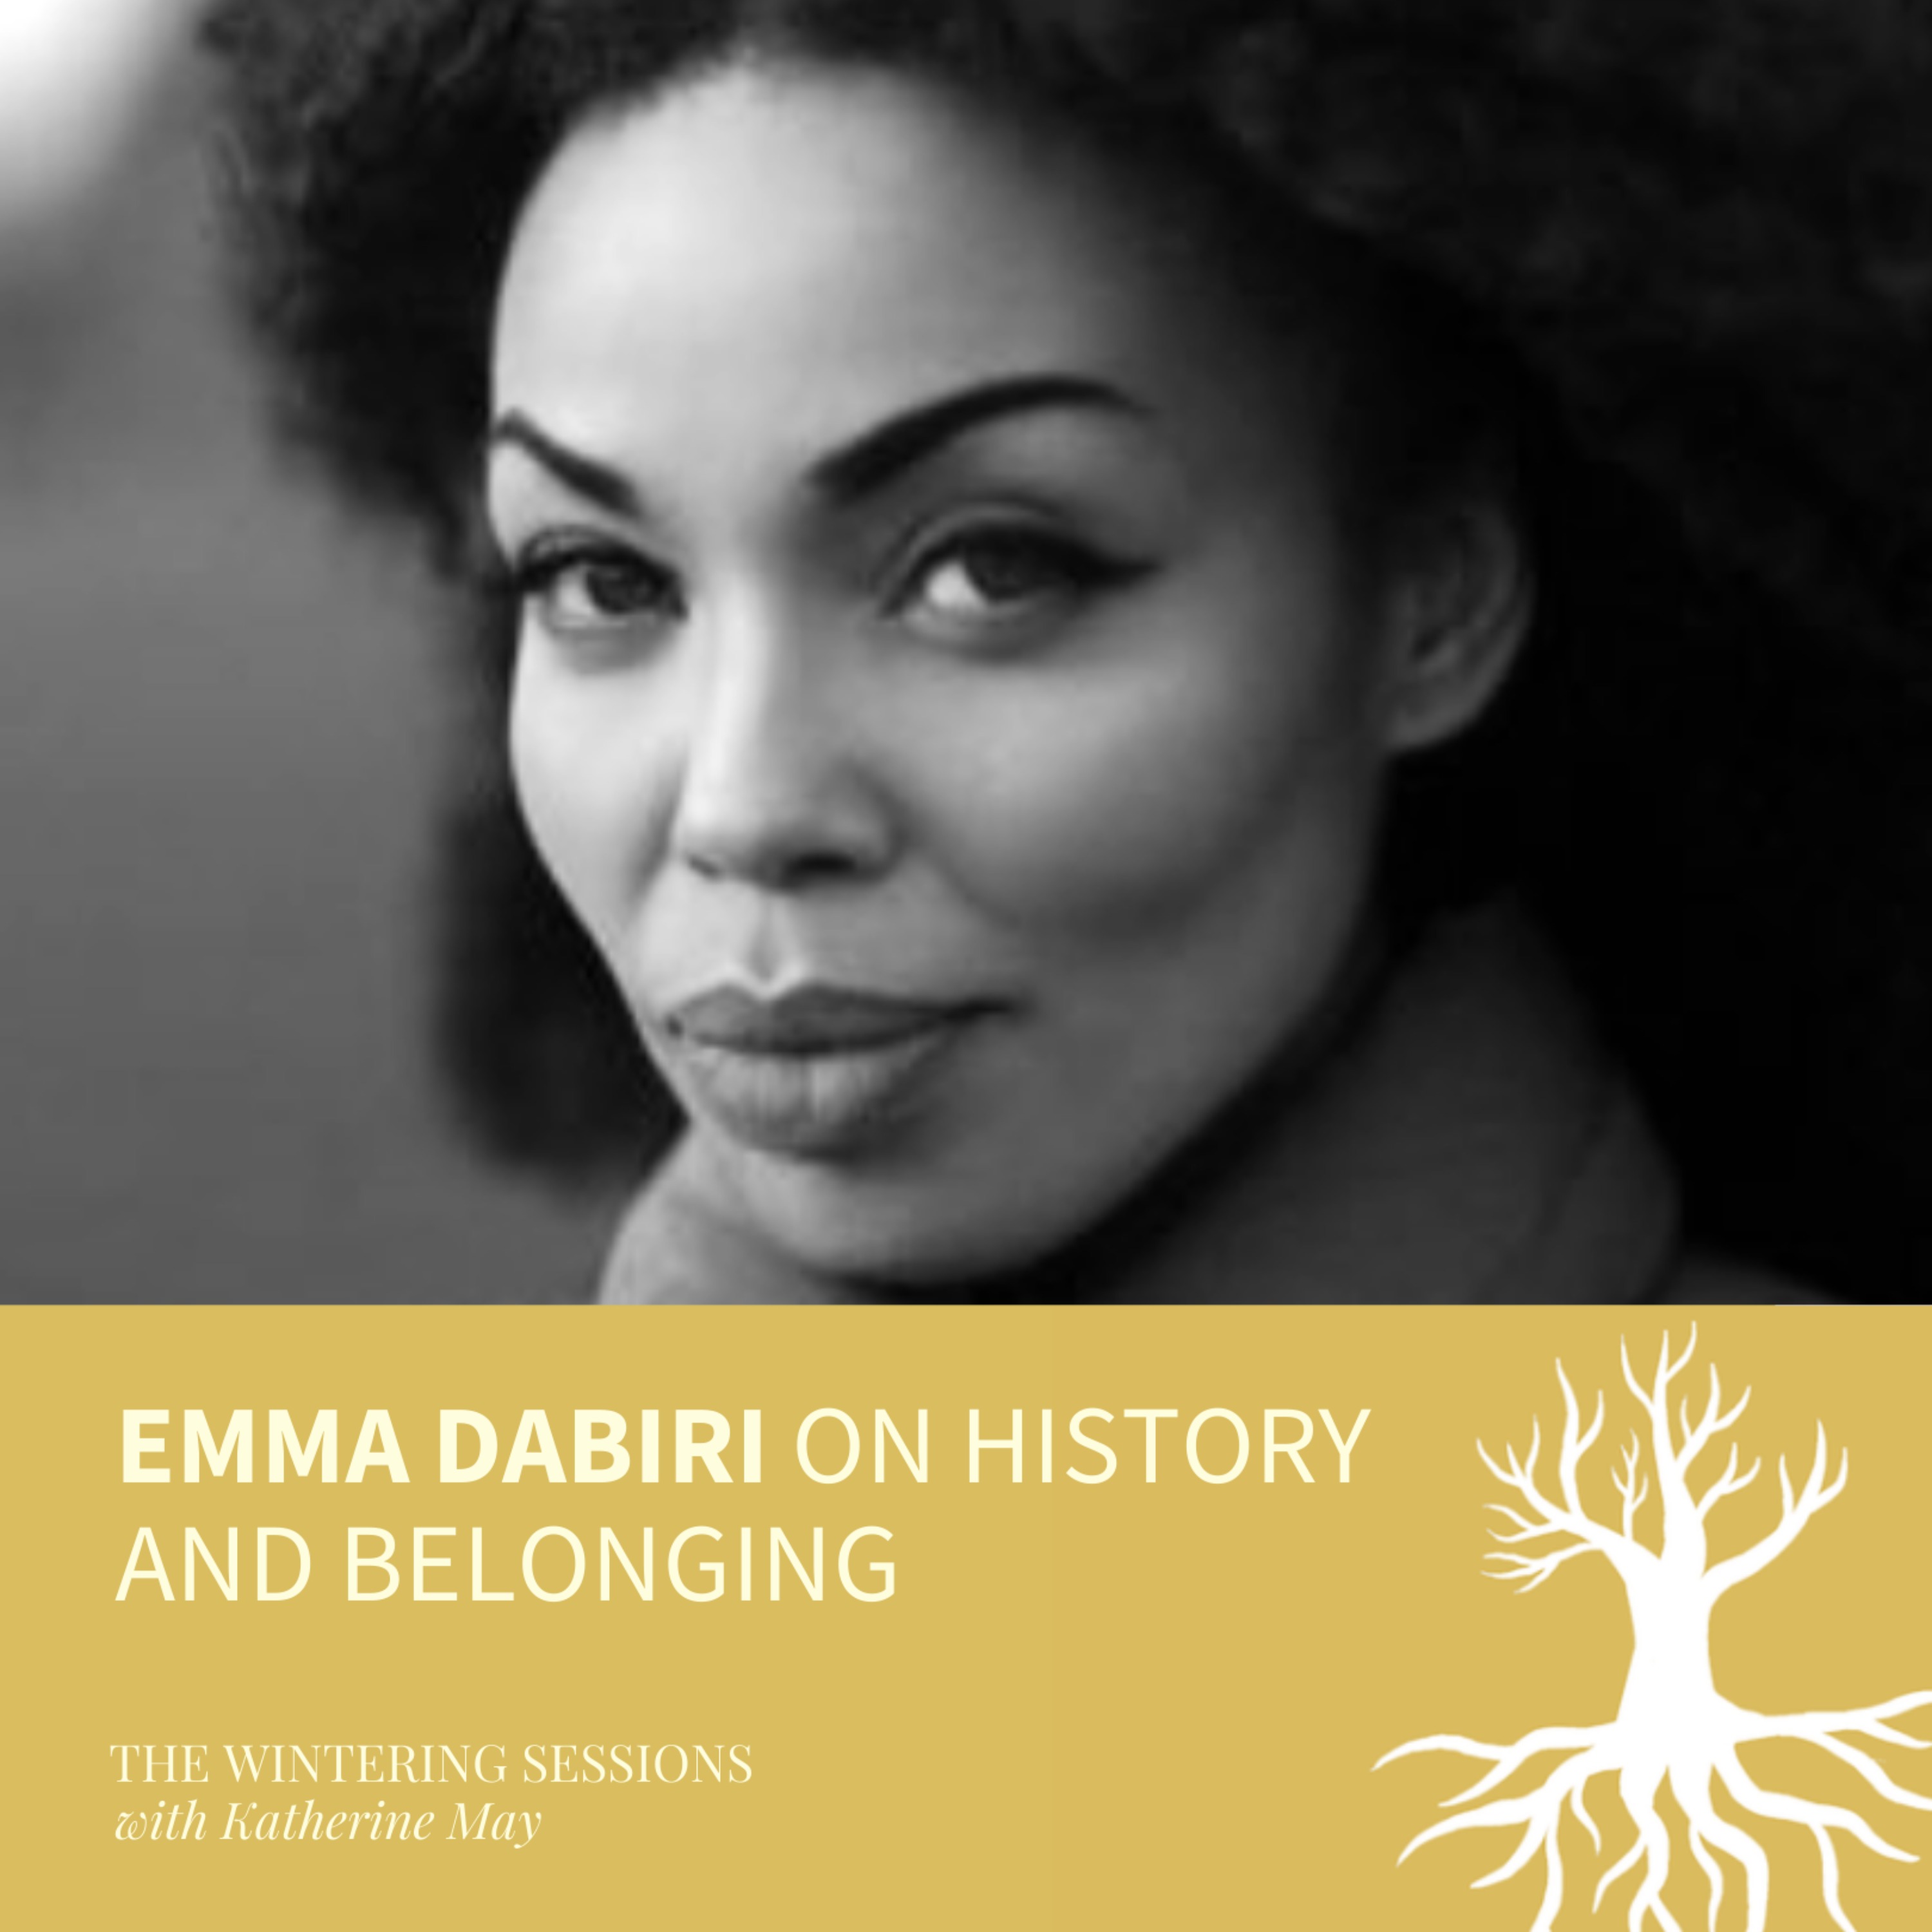 Emma Dabiri on history and belonging